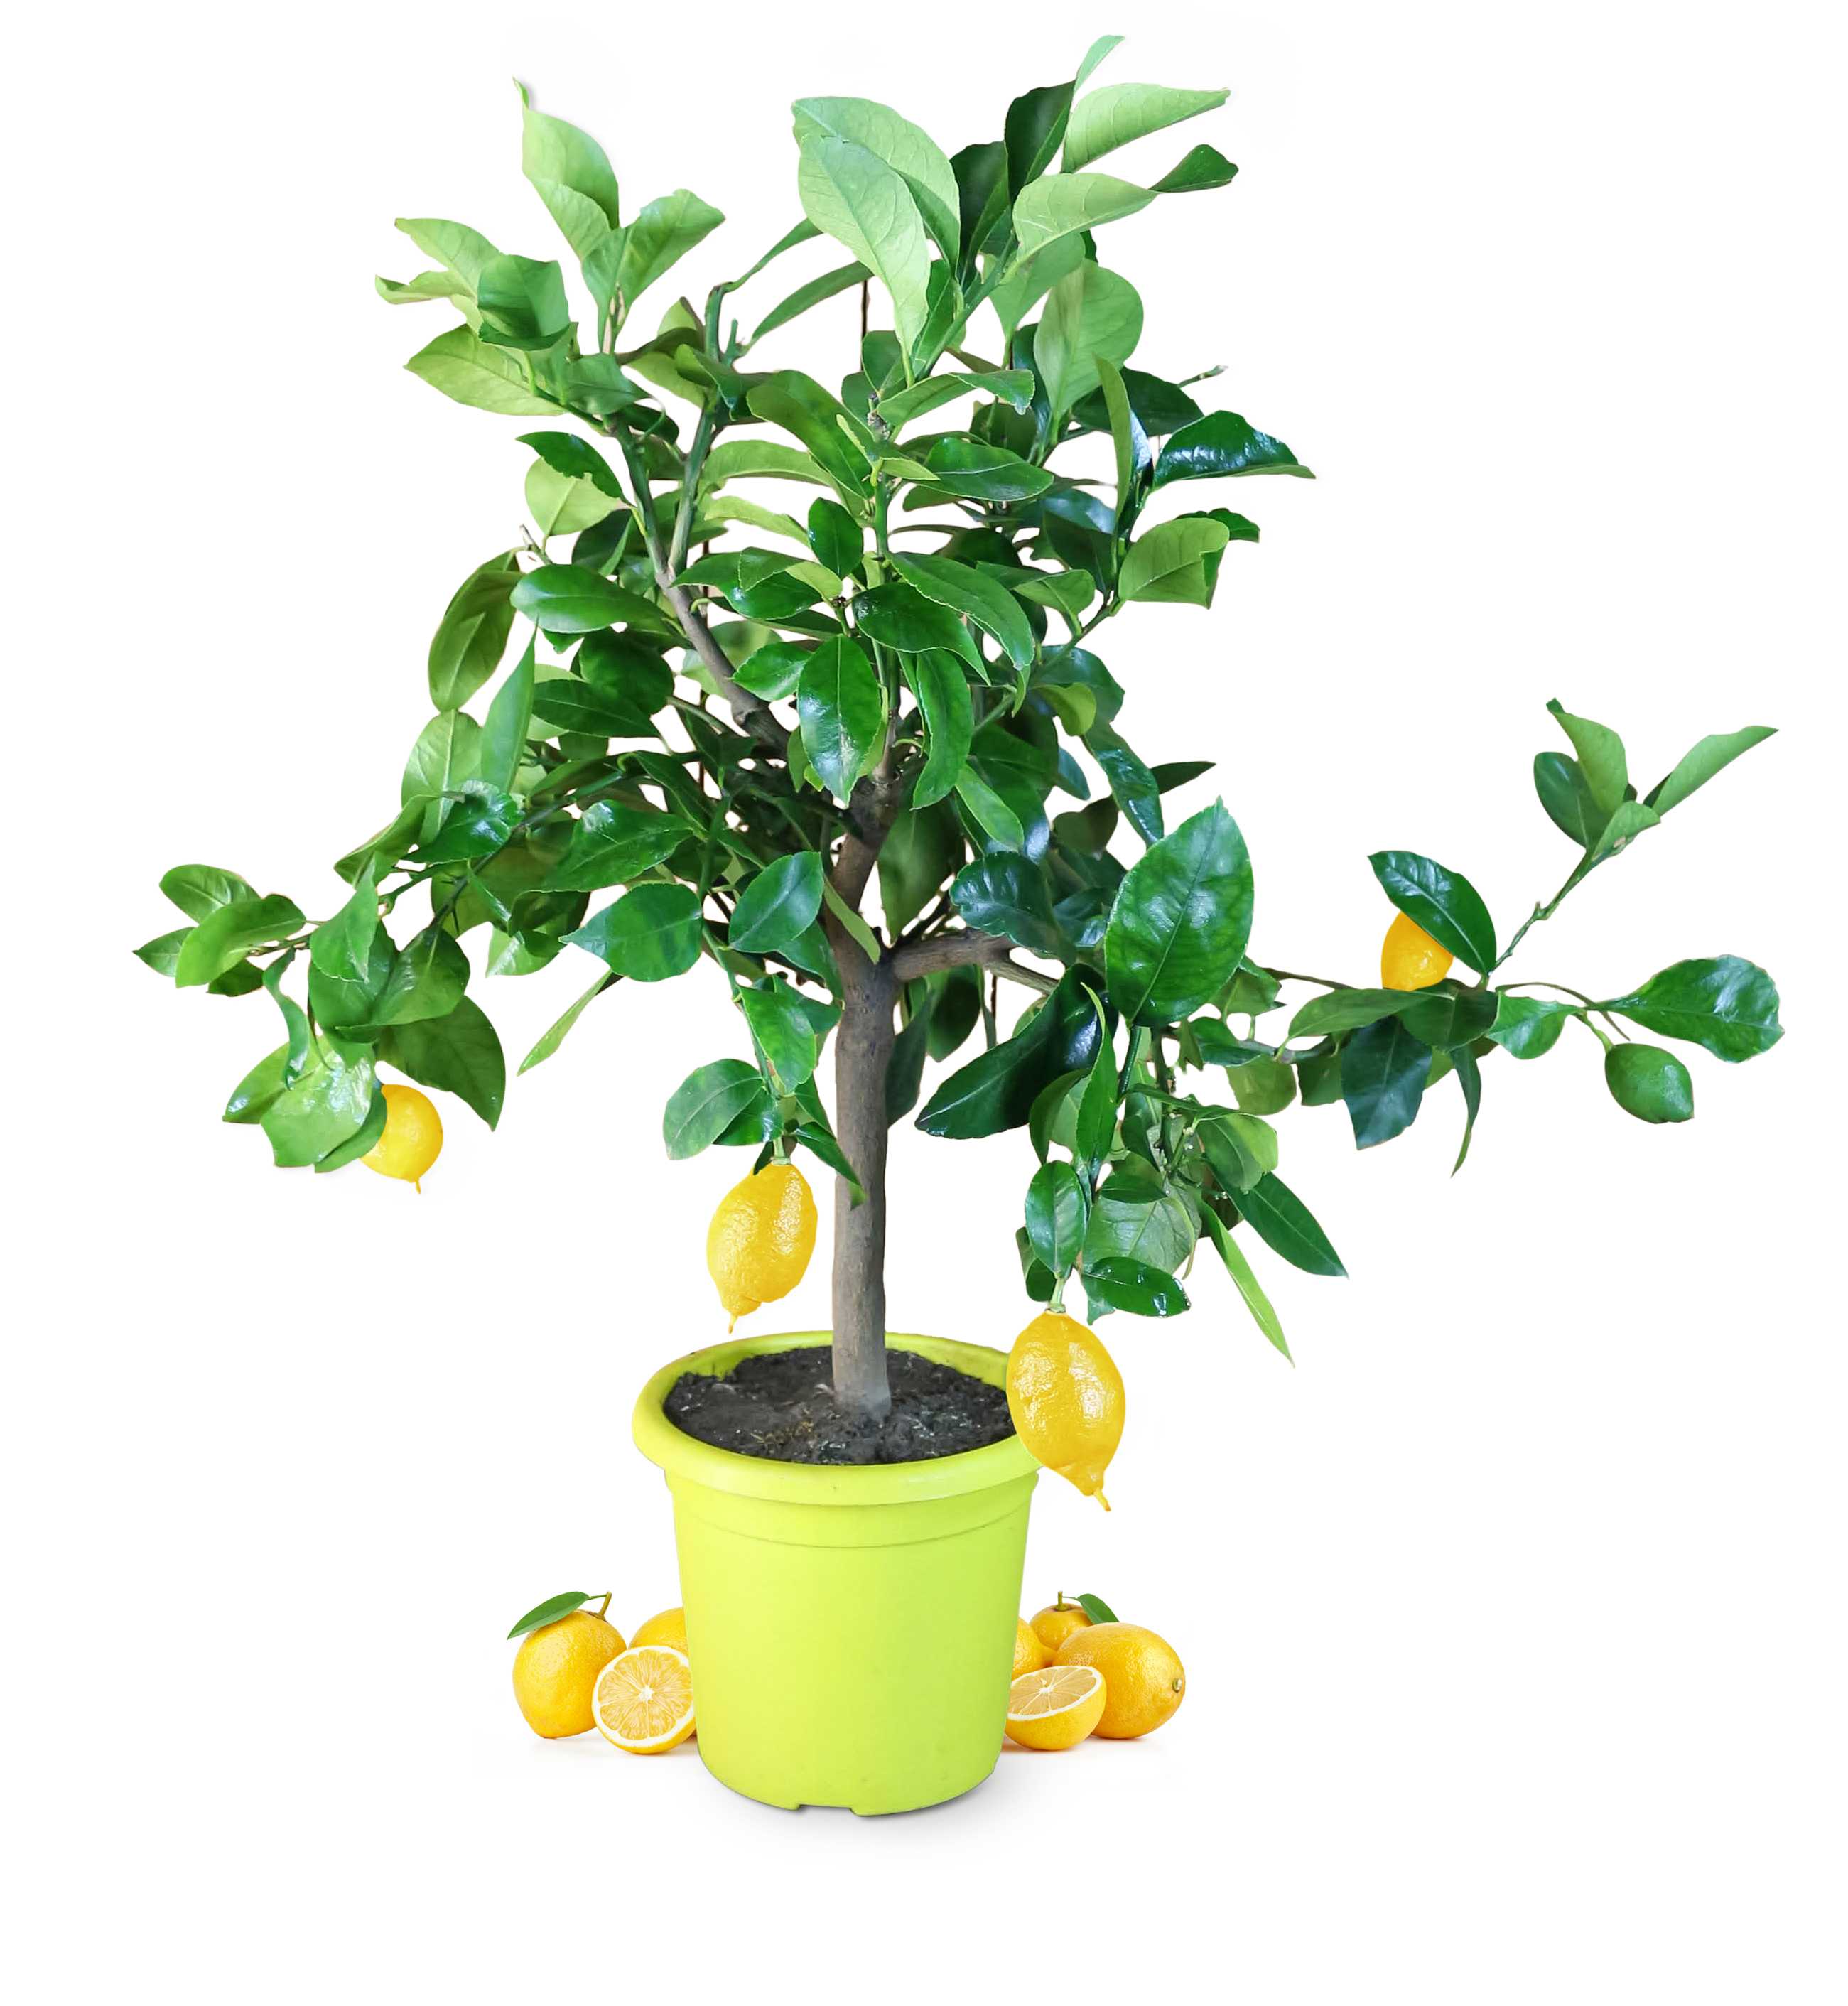 [RESTPOSTEN] Zitronenbaum [Piccolo]  - Citrus limon - echte Zitrone